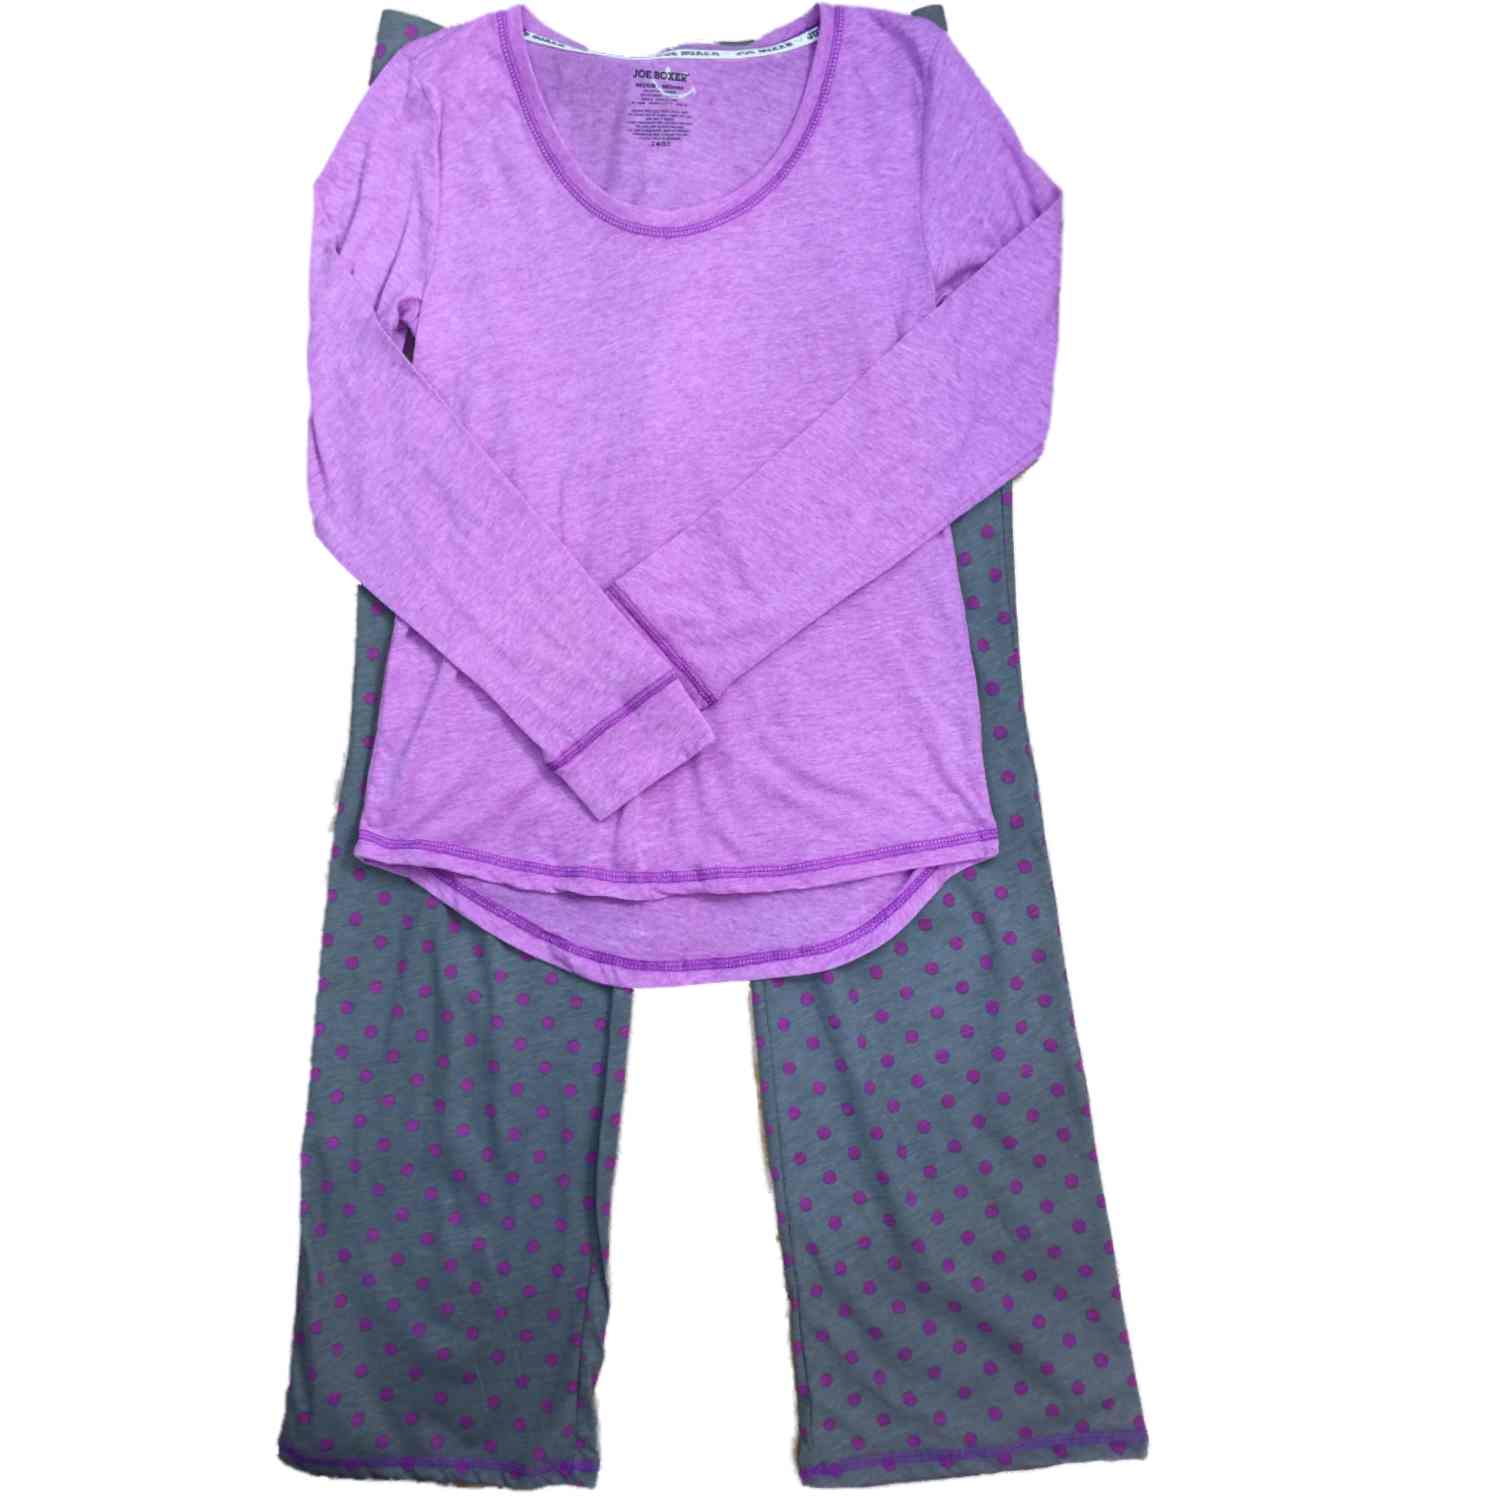 Joe Boxer Womens Purple & Gray Polka Dot Pajamas Knit T-Shirt Sleep Set